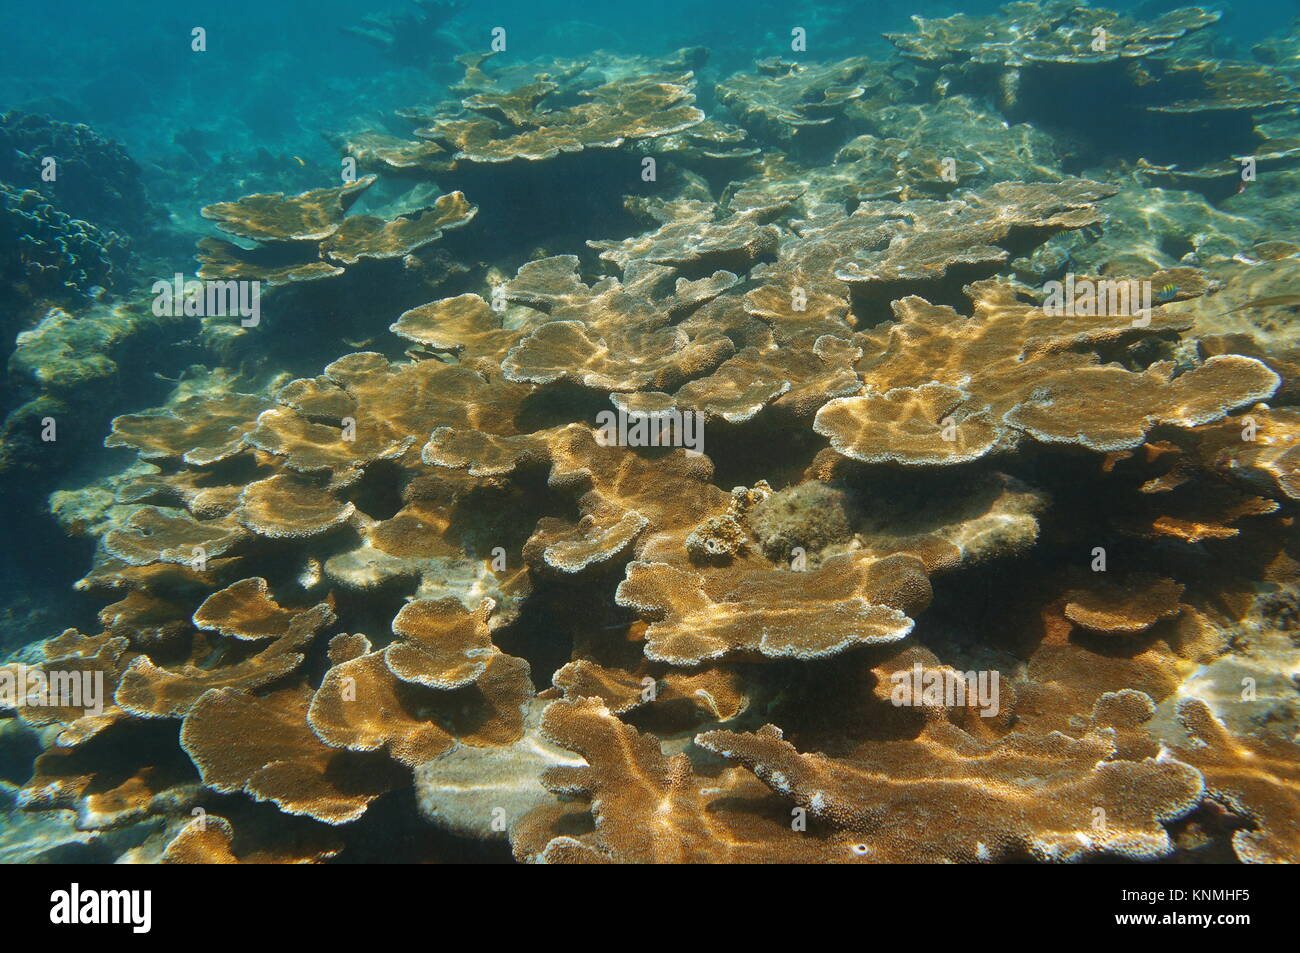 Underwater reef with Elkhorn corals, Key largo, Florida, USA Stock Photo